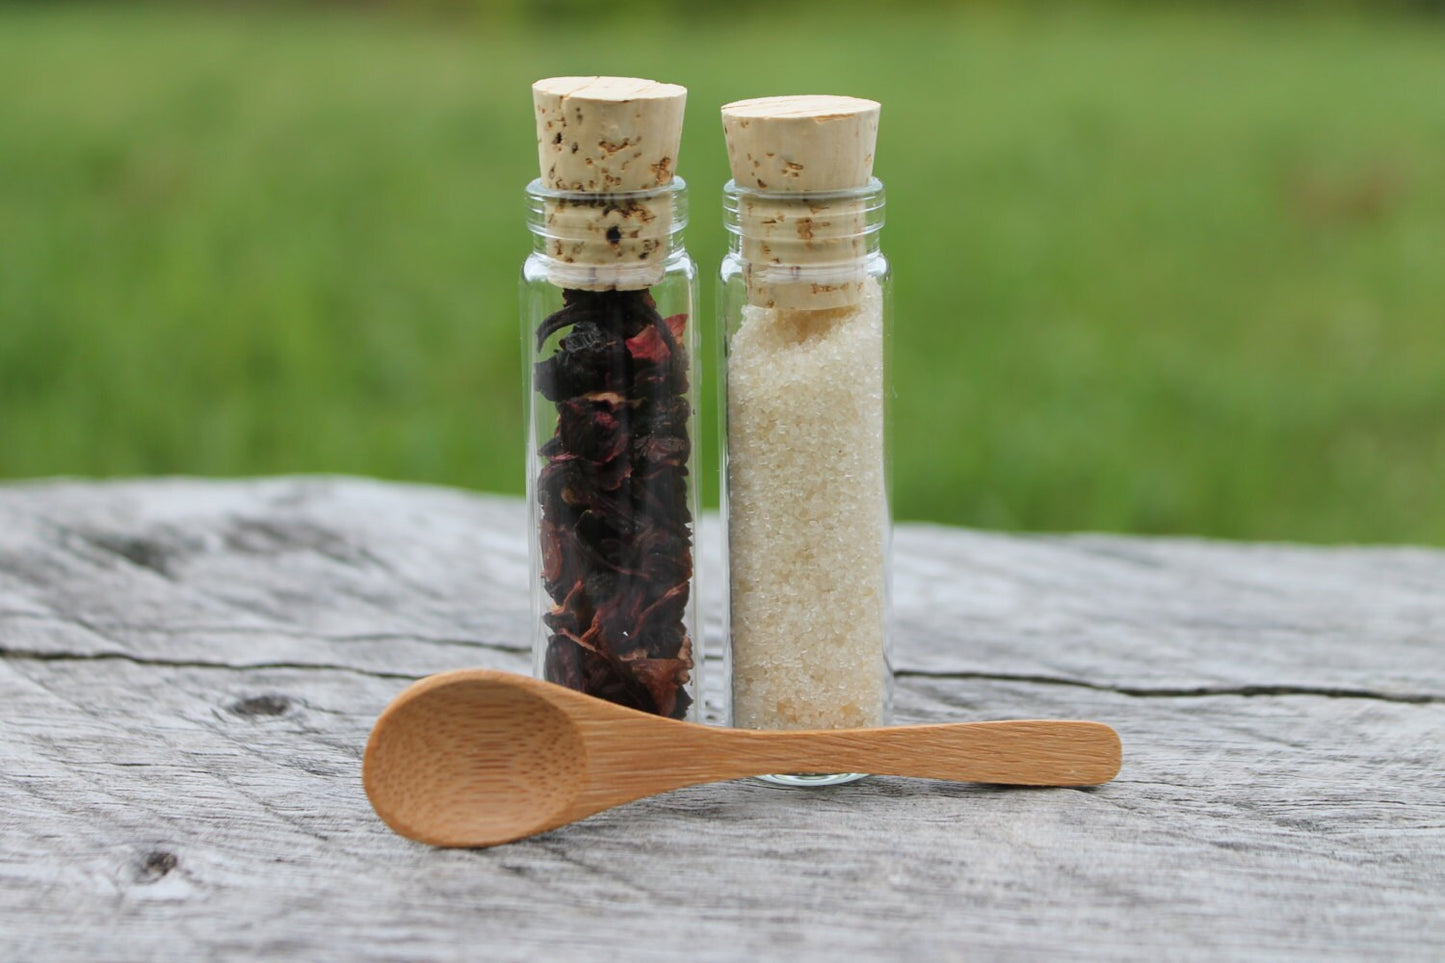 Tea Party Favor-Organic Tea and Sugar or Honey with Spoon Mini Set Favor-Belle Savon Vermont